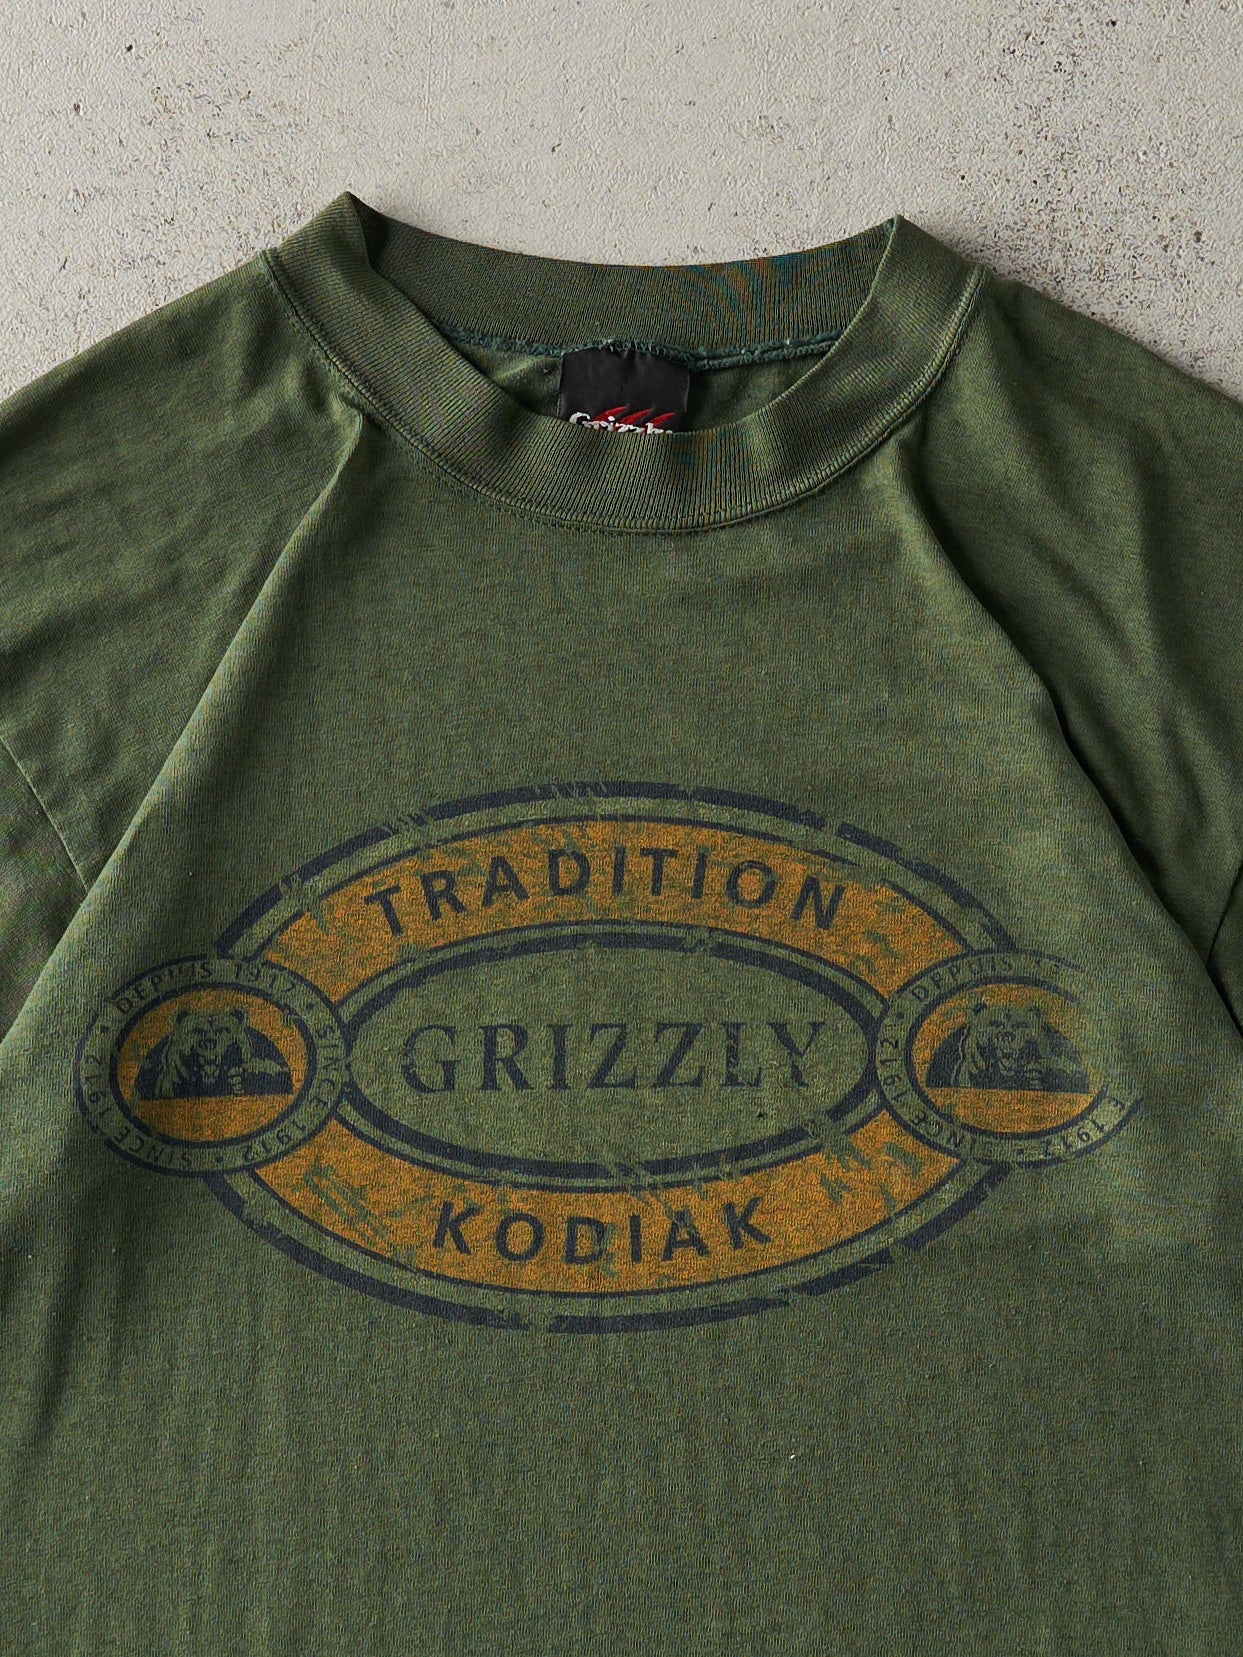 Vintage 90s Green Tradition Kodiak Grizzly Single Stitch Tee (M)